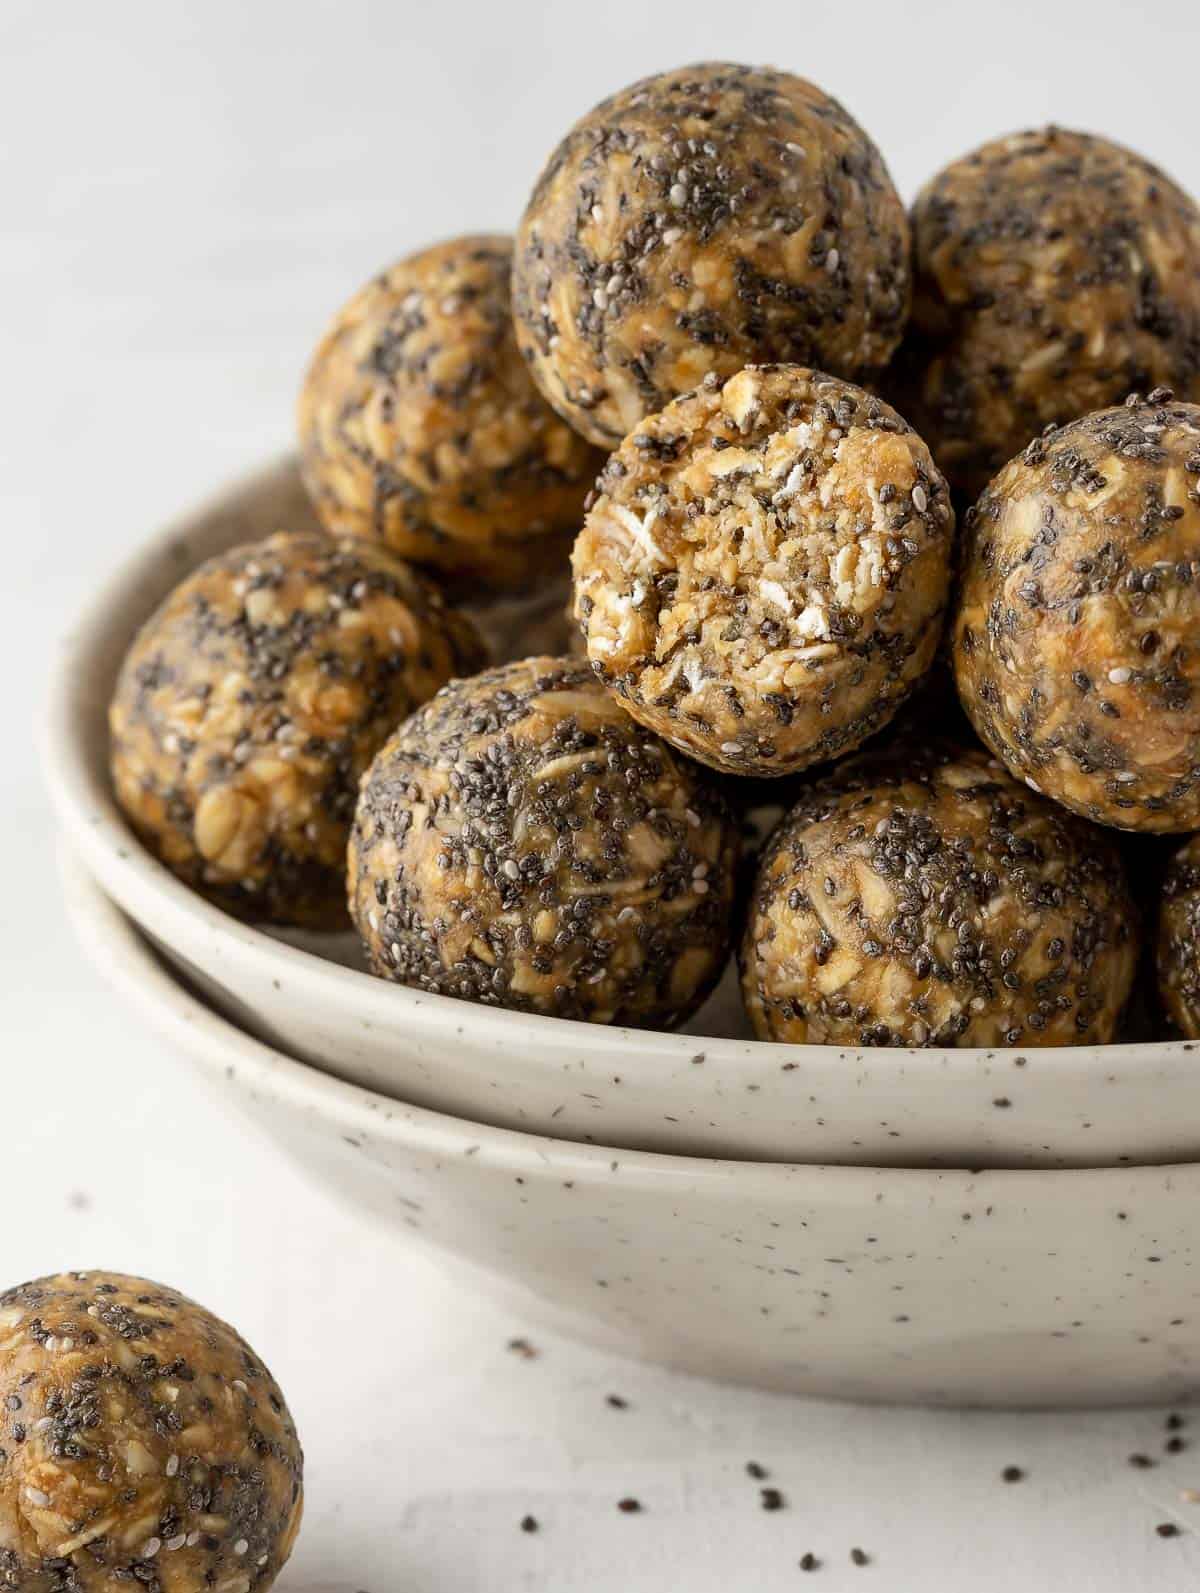 Healthy protein balls